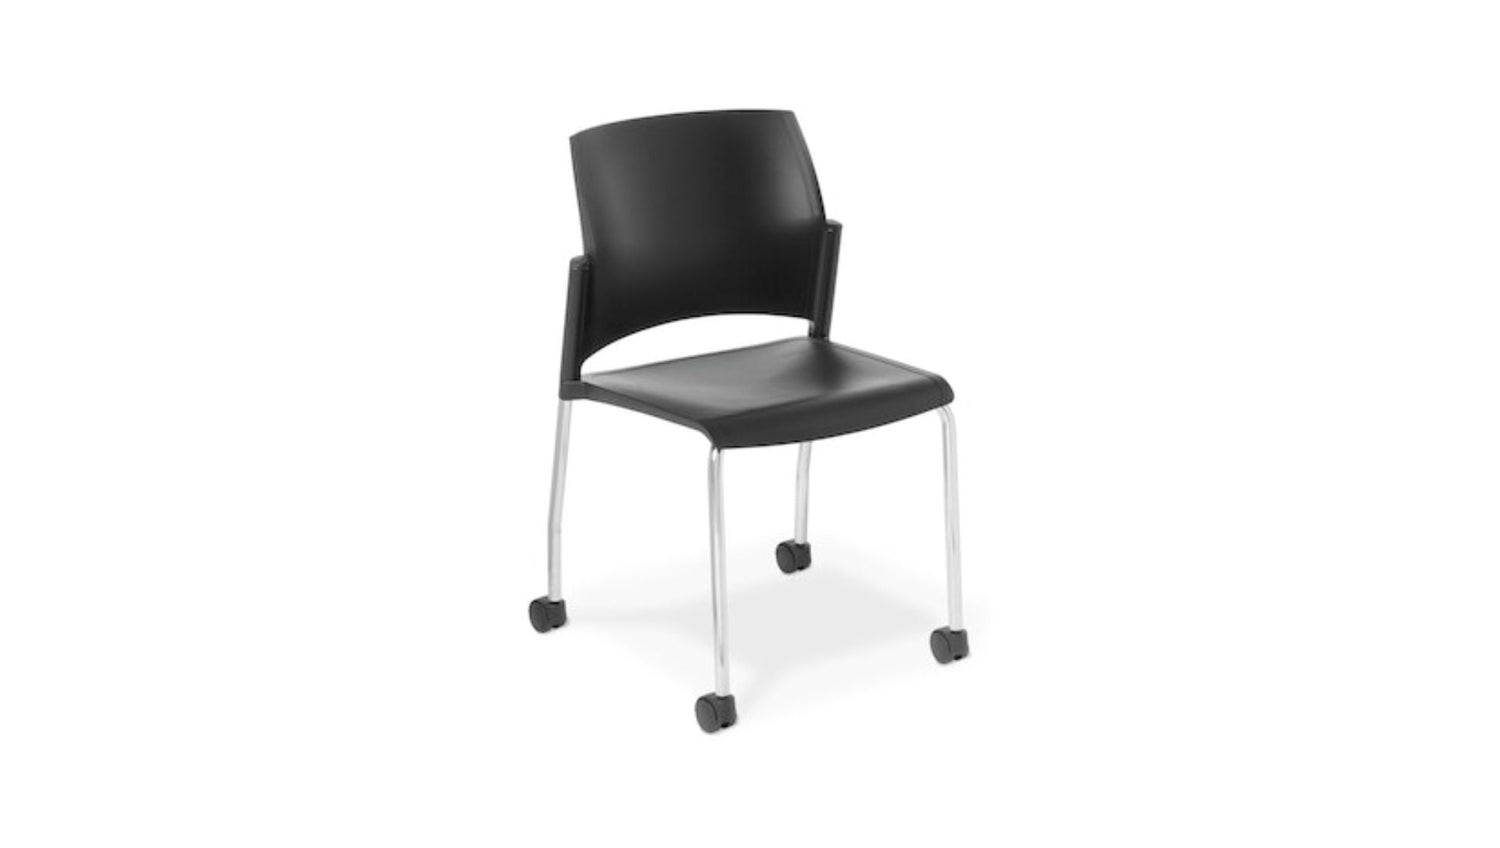 Seating 4-leg on Castors / Black Spring Chair